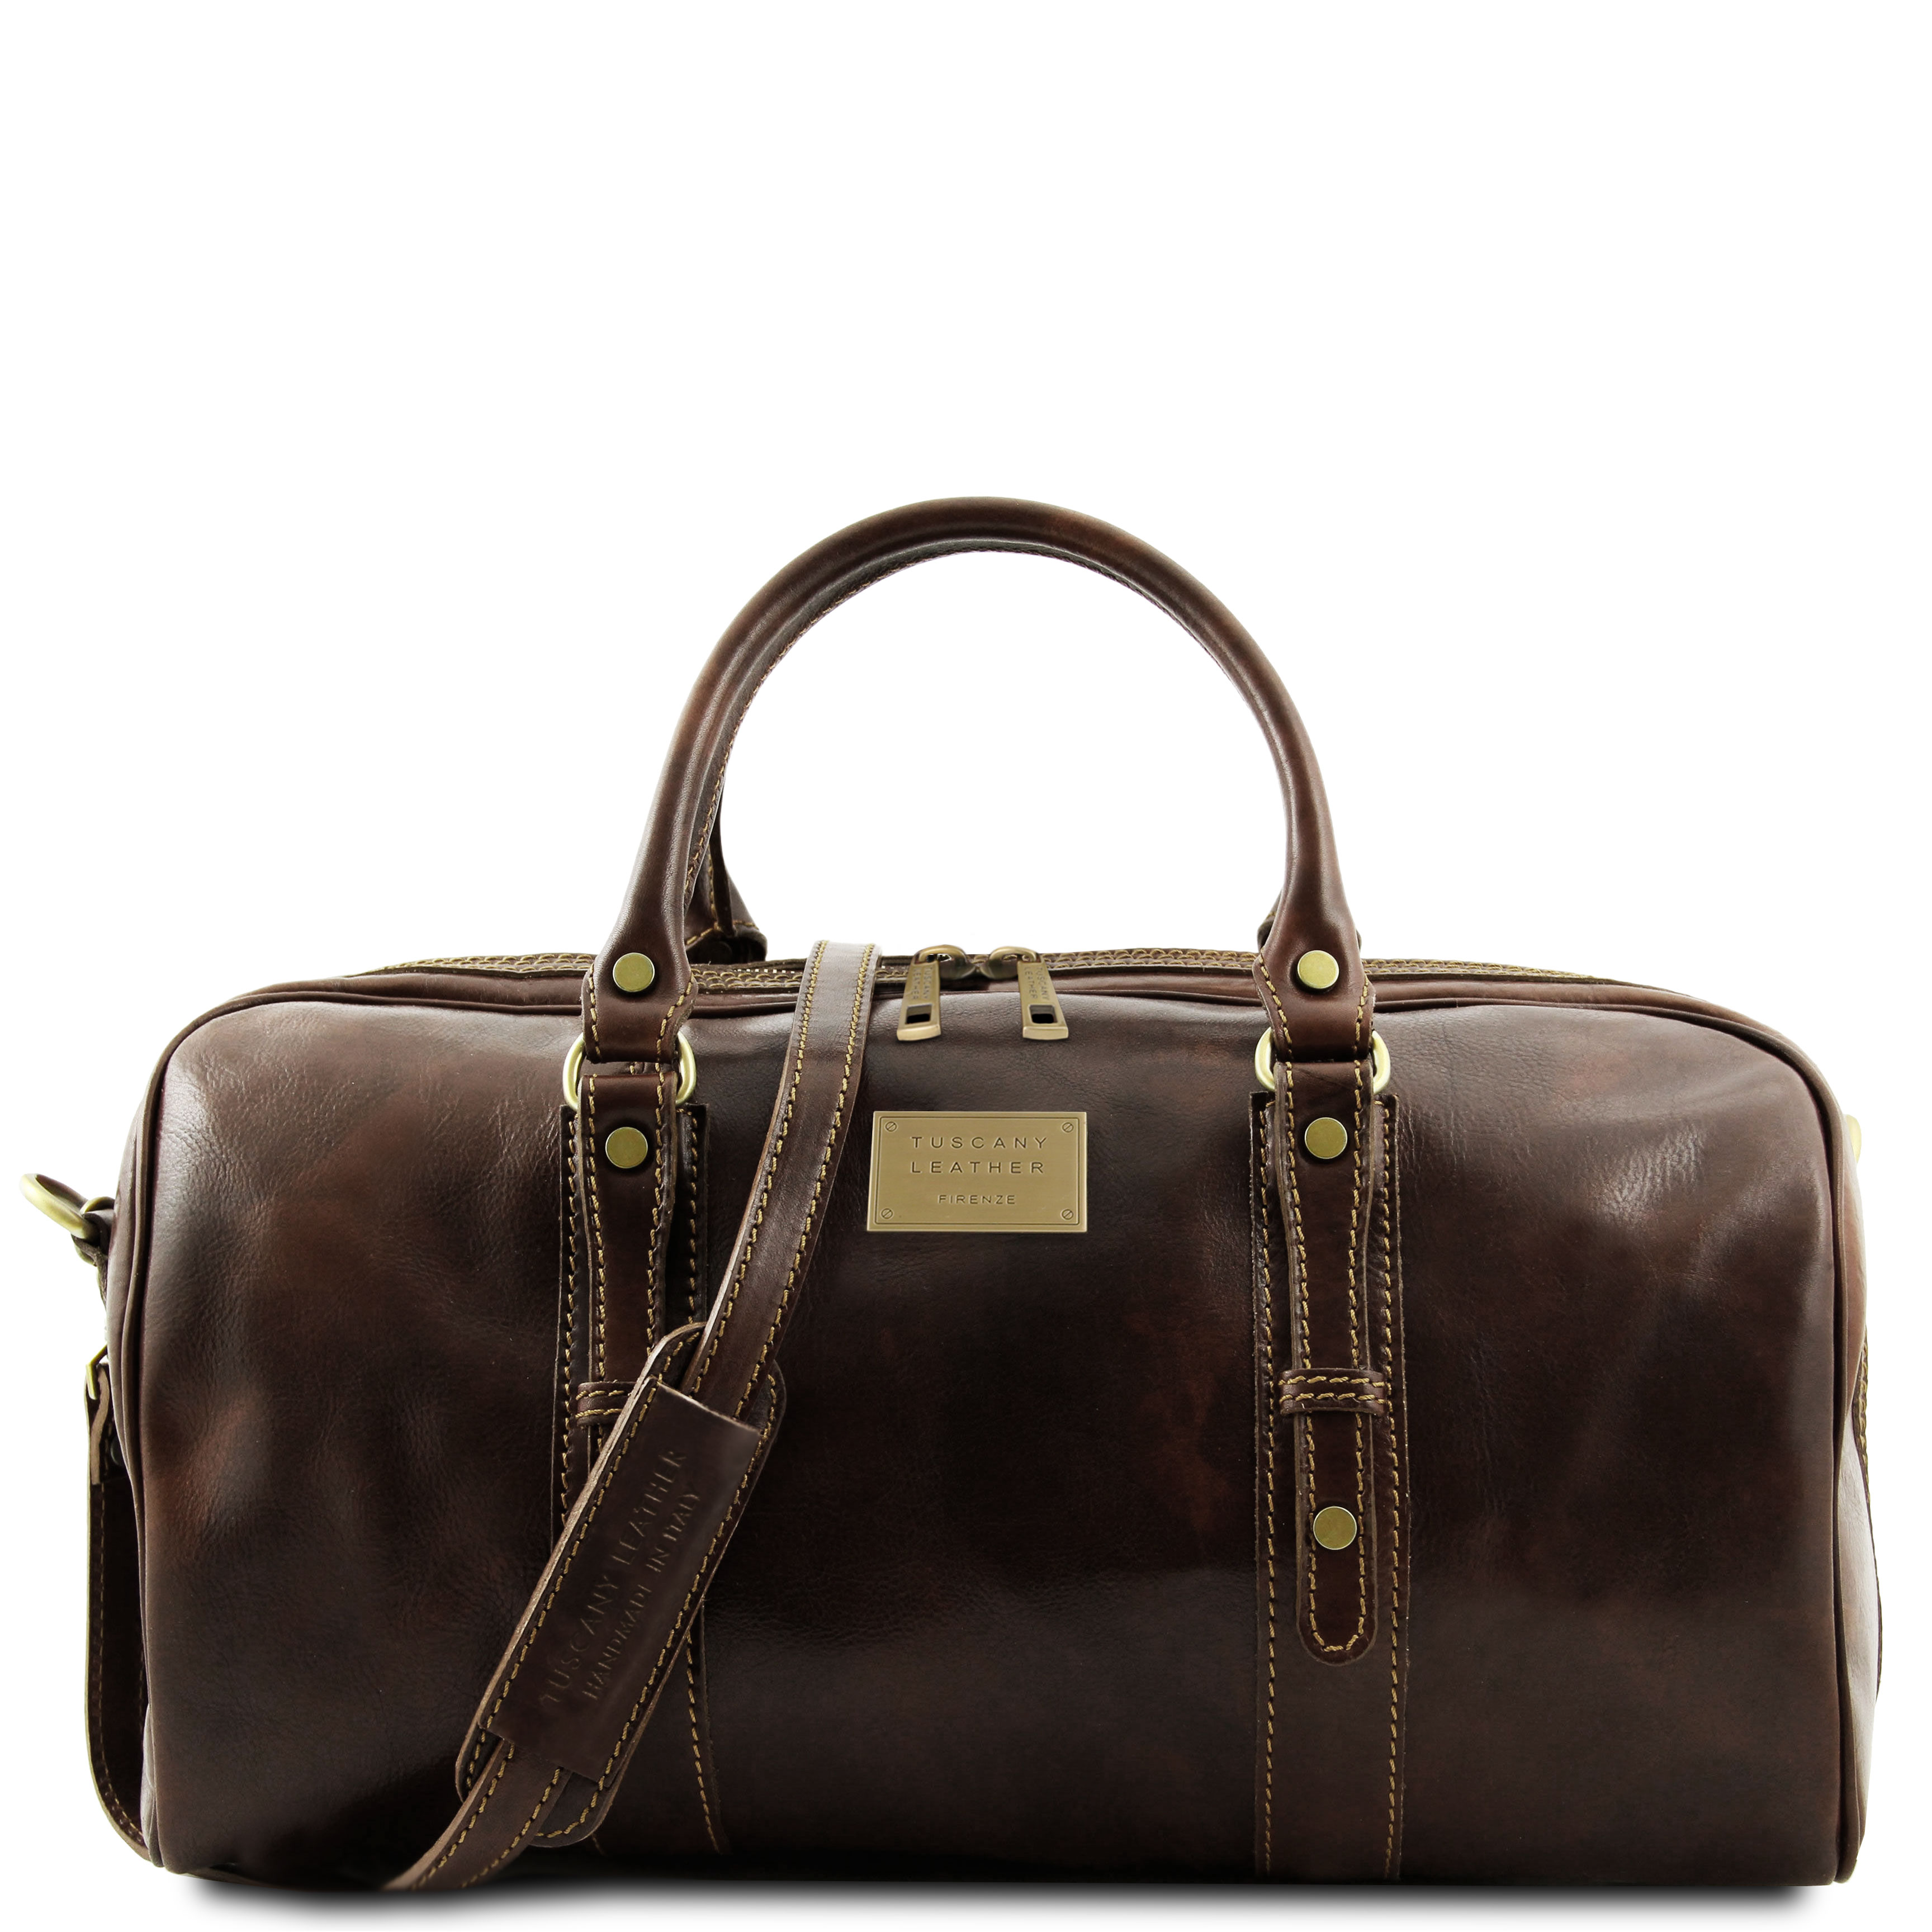 Francoforte Exclusive Leather Weekender Travel Bag - Small size Dark Brown